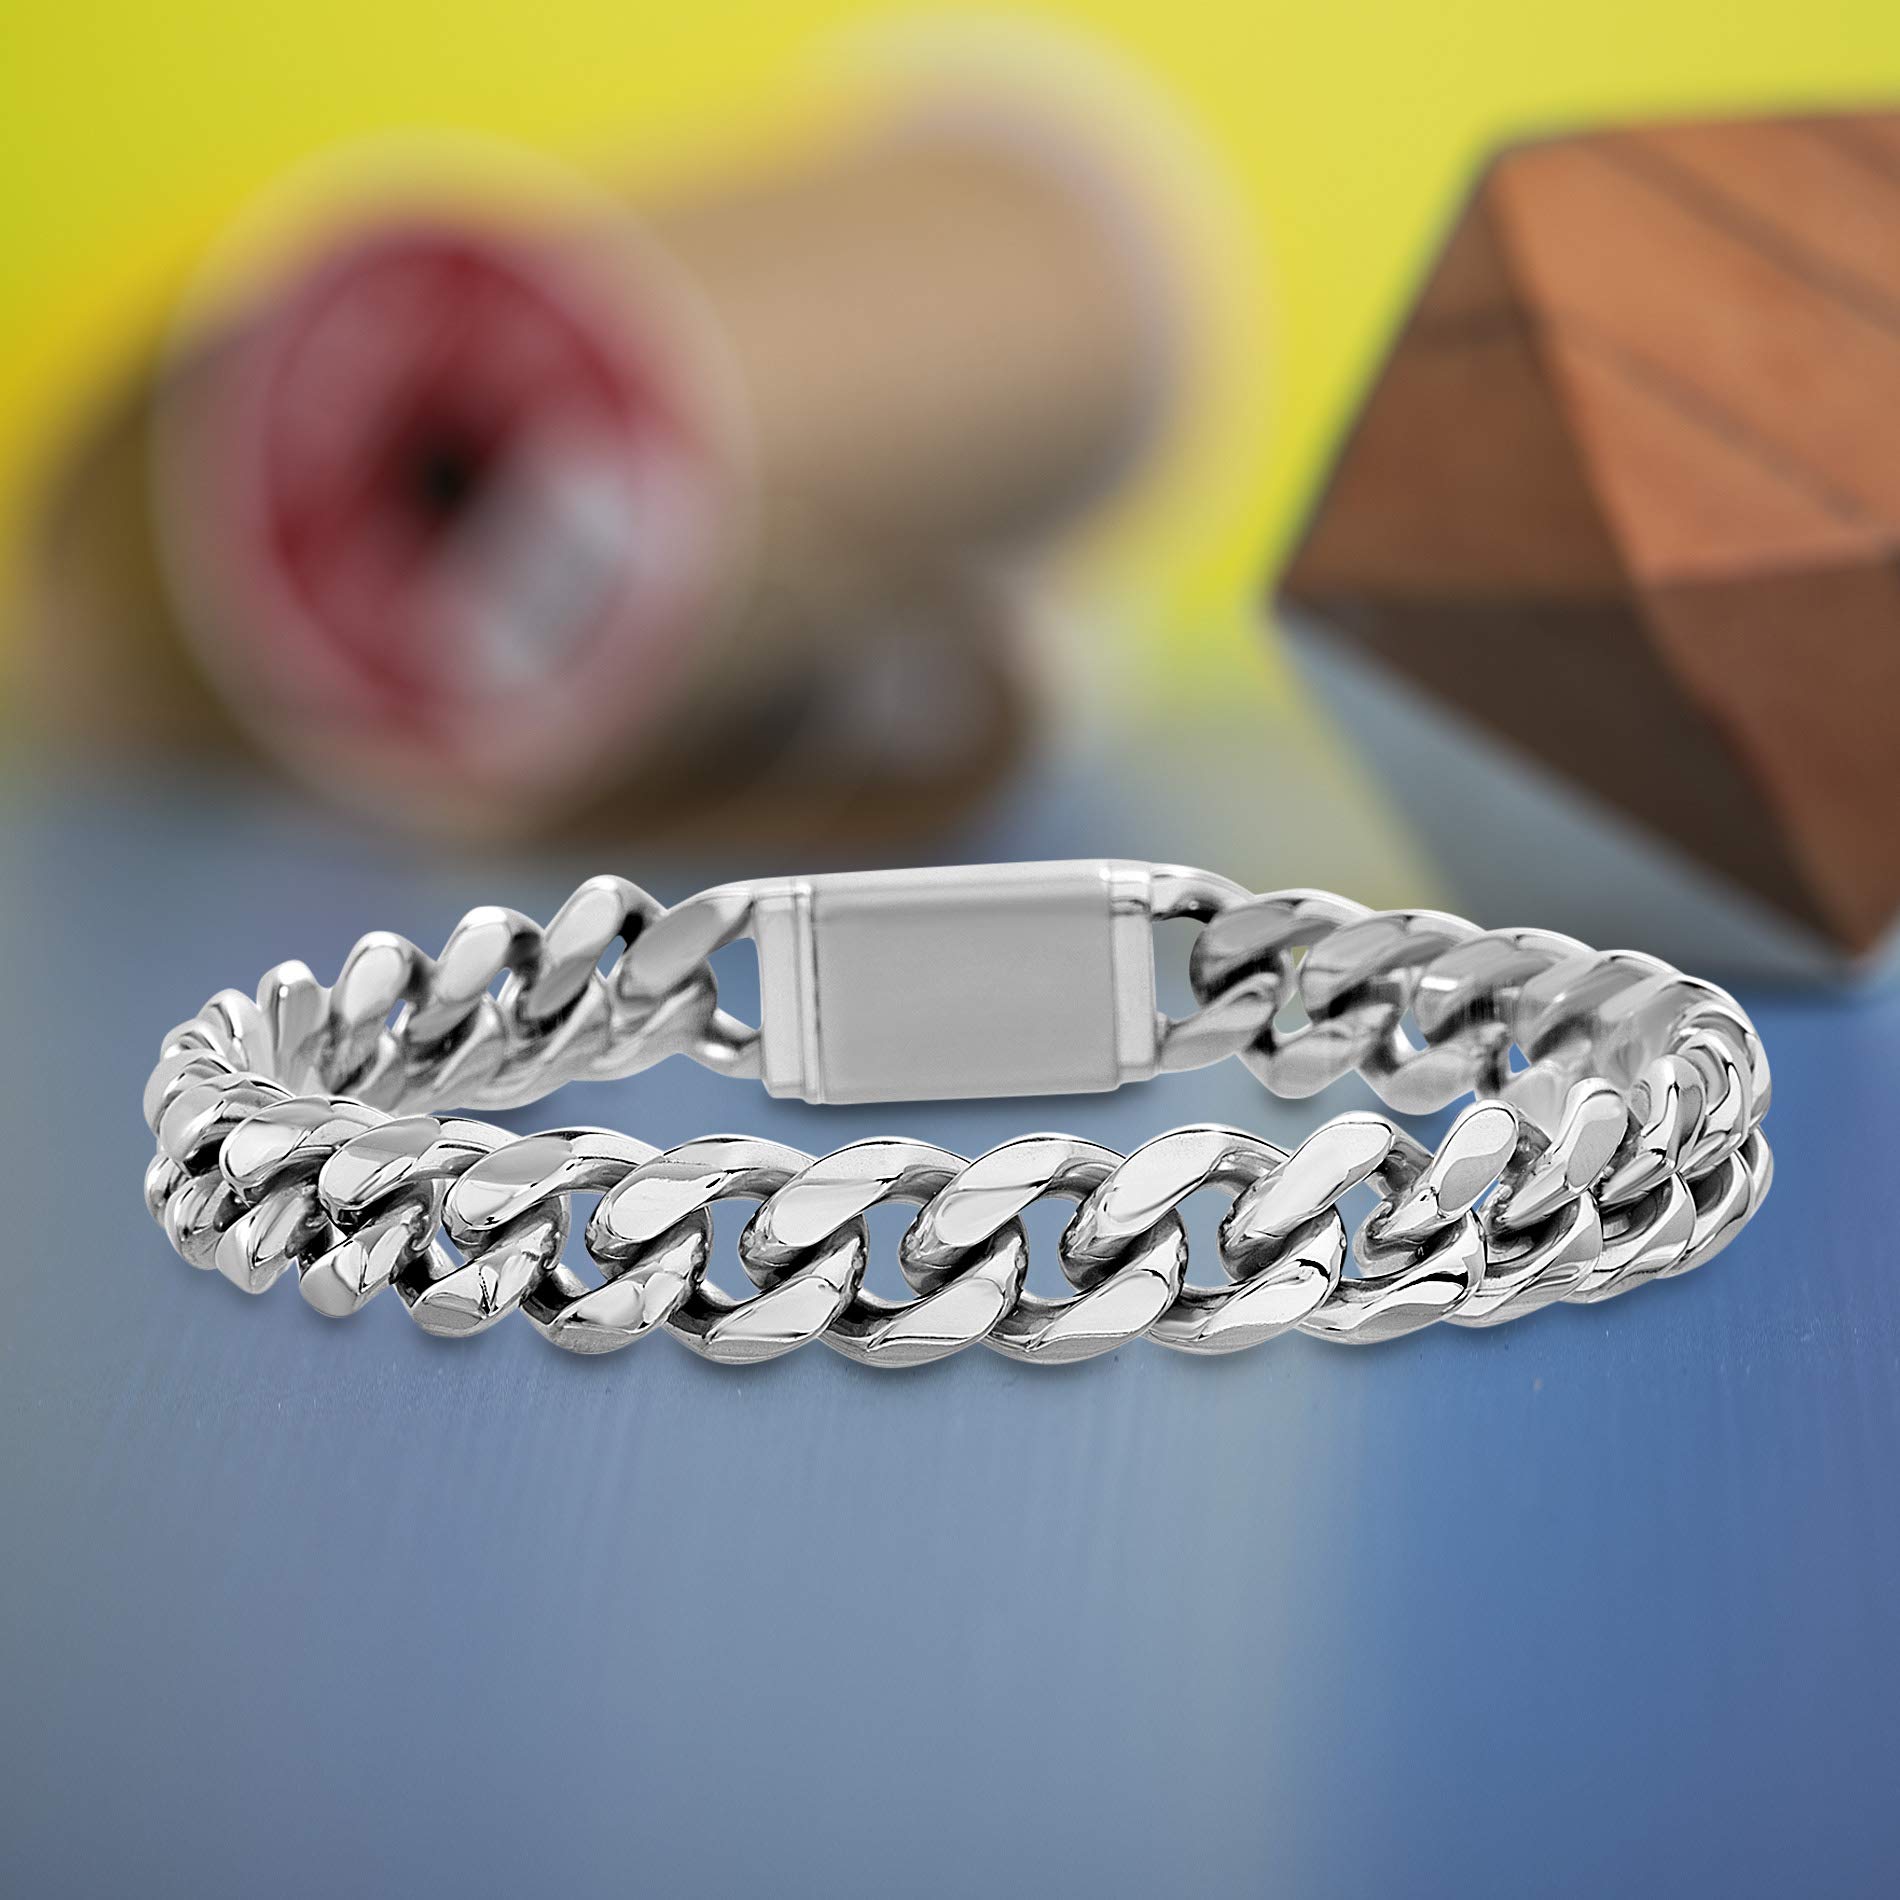 Nautica Men’s Bracelet – Stainless Steel Miami Cuban Flat Link Curb Chain Bracelet for Women